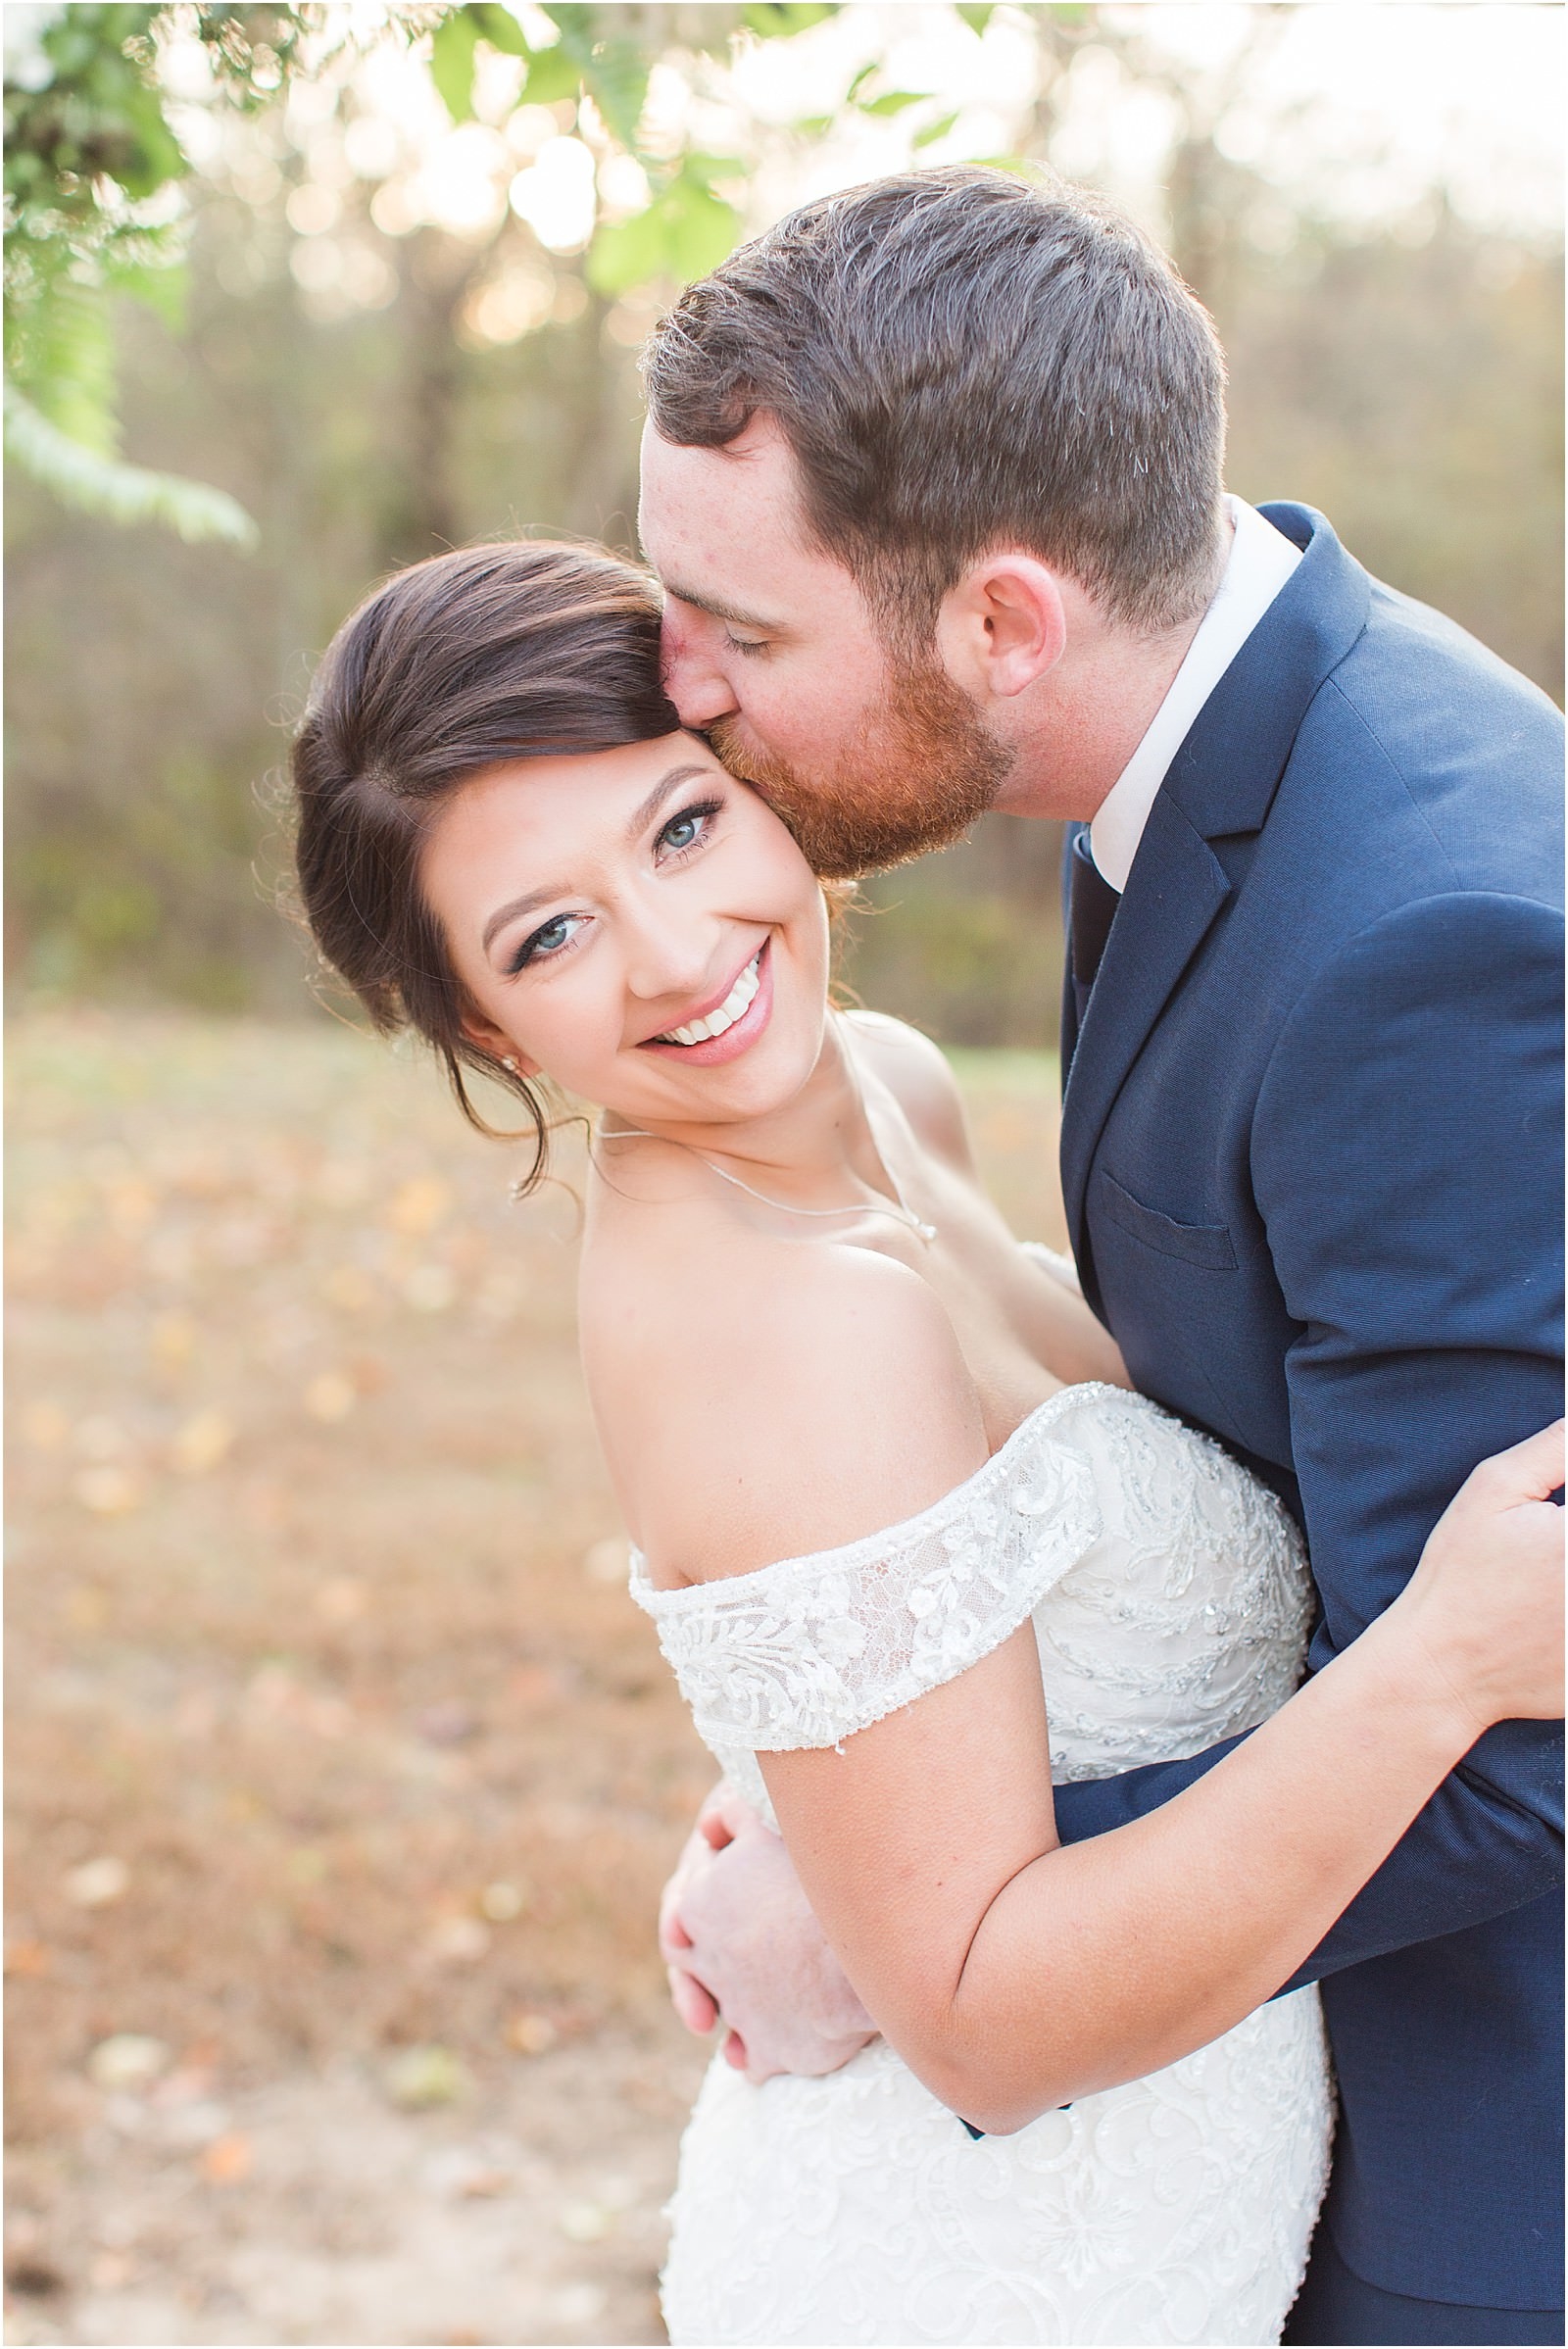 Walker and Alyssa's intimate fall wedding in Southern Indiana. | Wedding Photography | The Corner House Wedding | Southern Indiana Wedding | #fallwedding #intimatewedding | 073.jpg